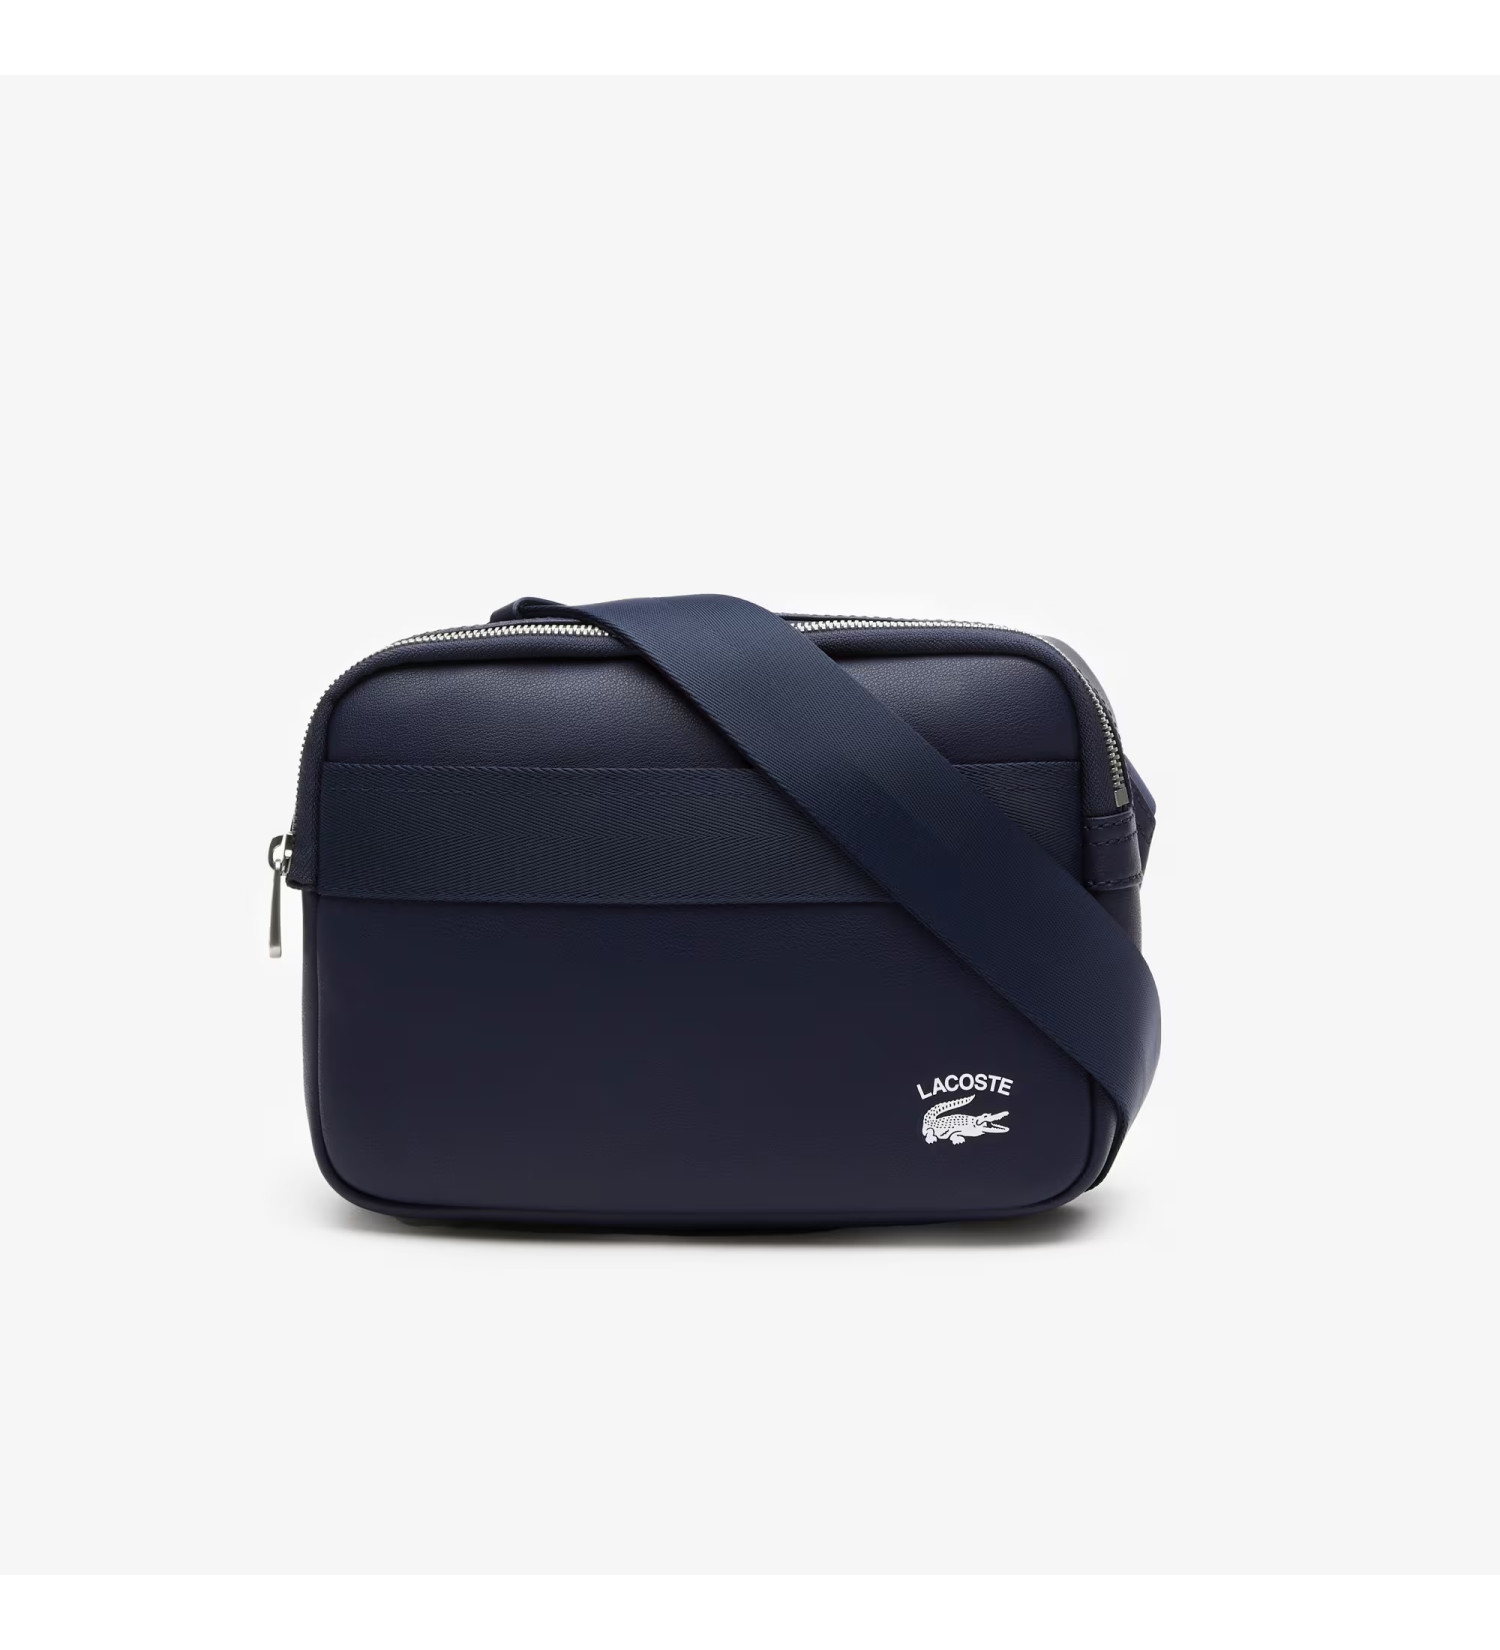 Lacoste - Men's Lacoste Contrast Edge Reporter Bag Size One Size